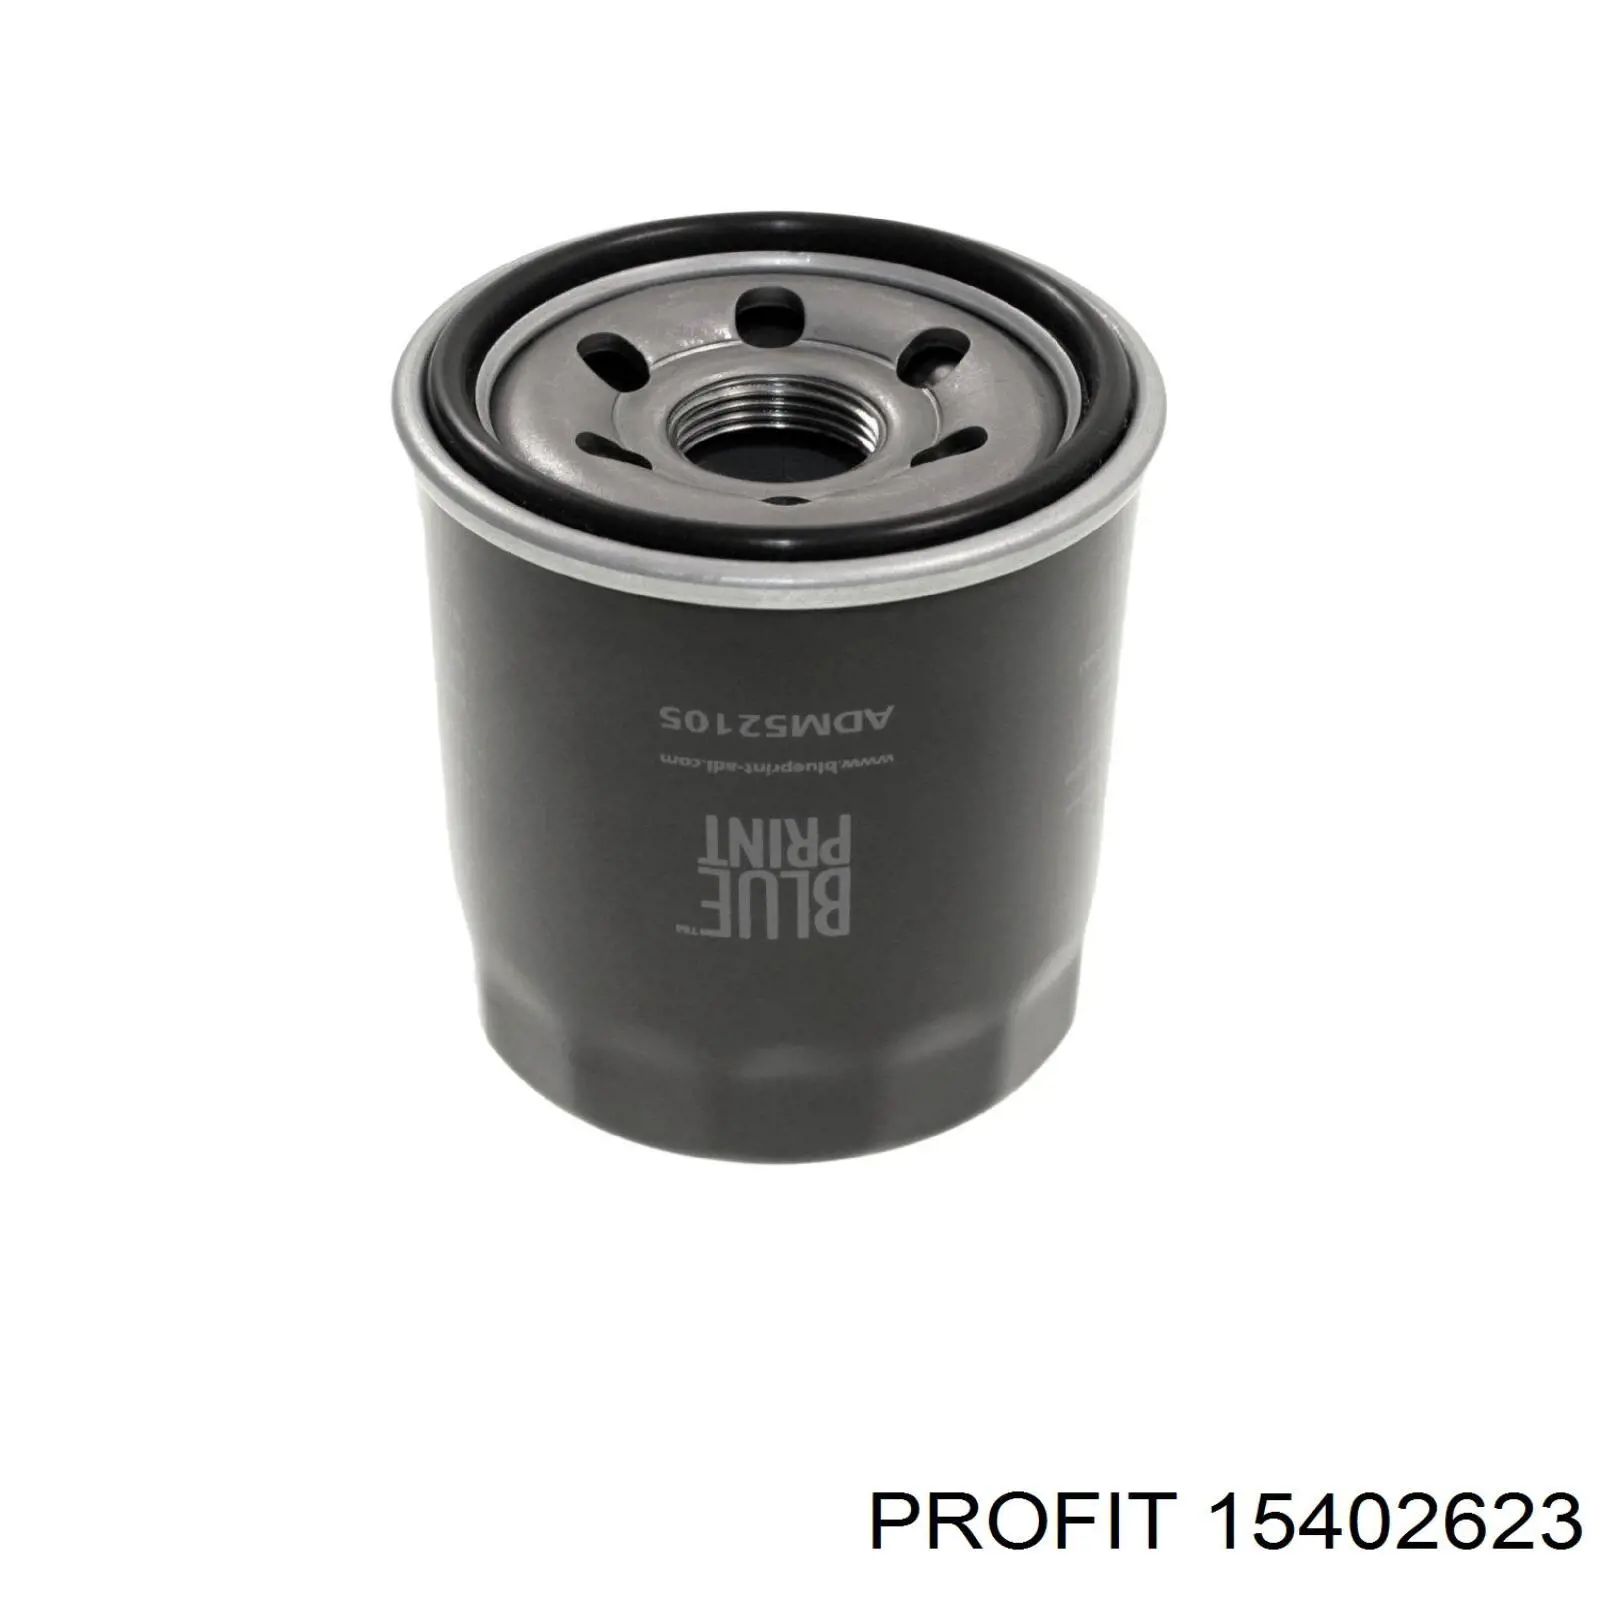 1540-2623 Profit filtro de aceite